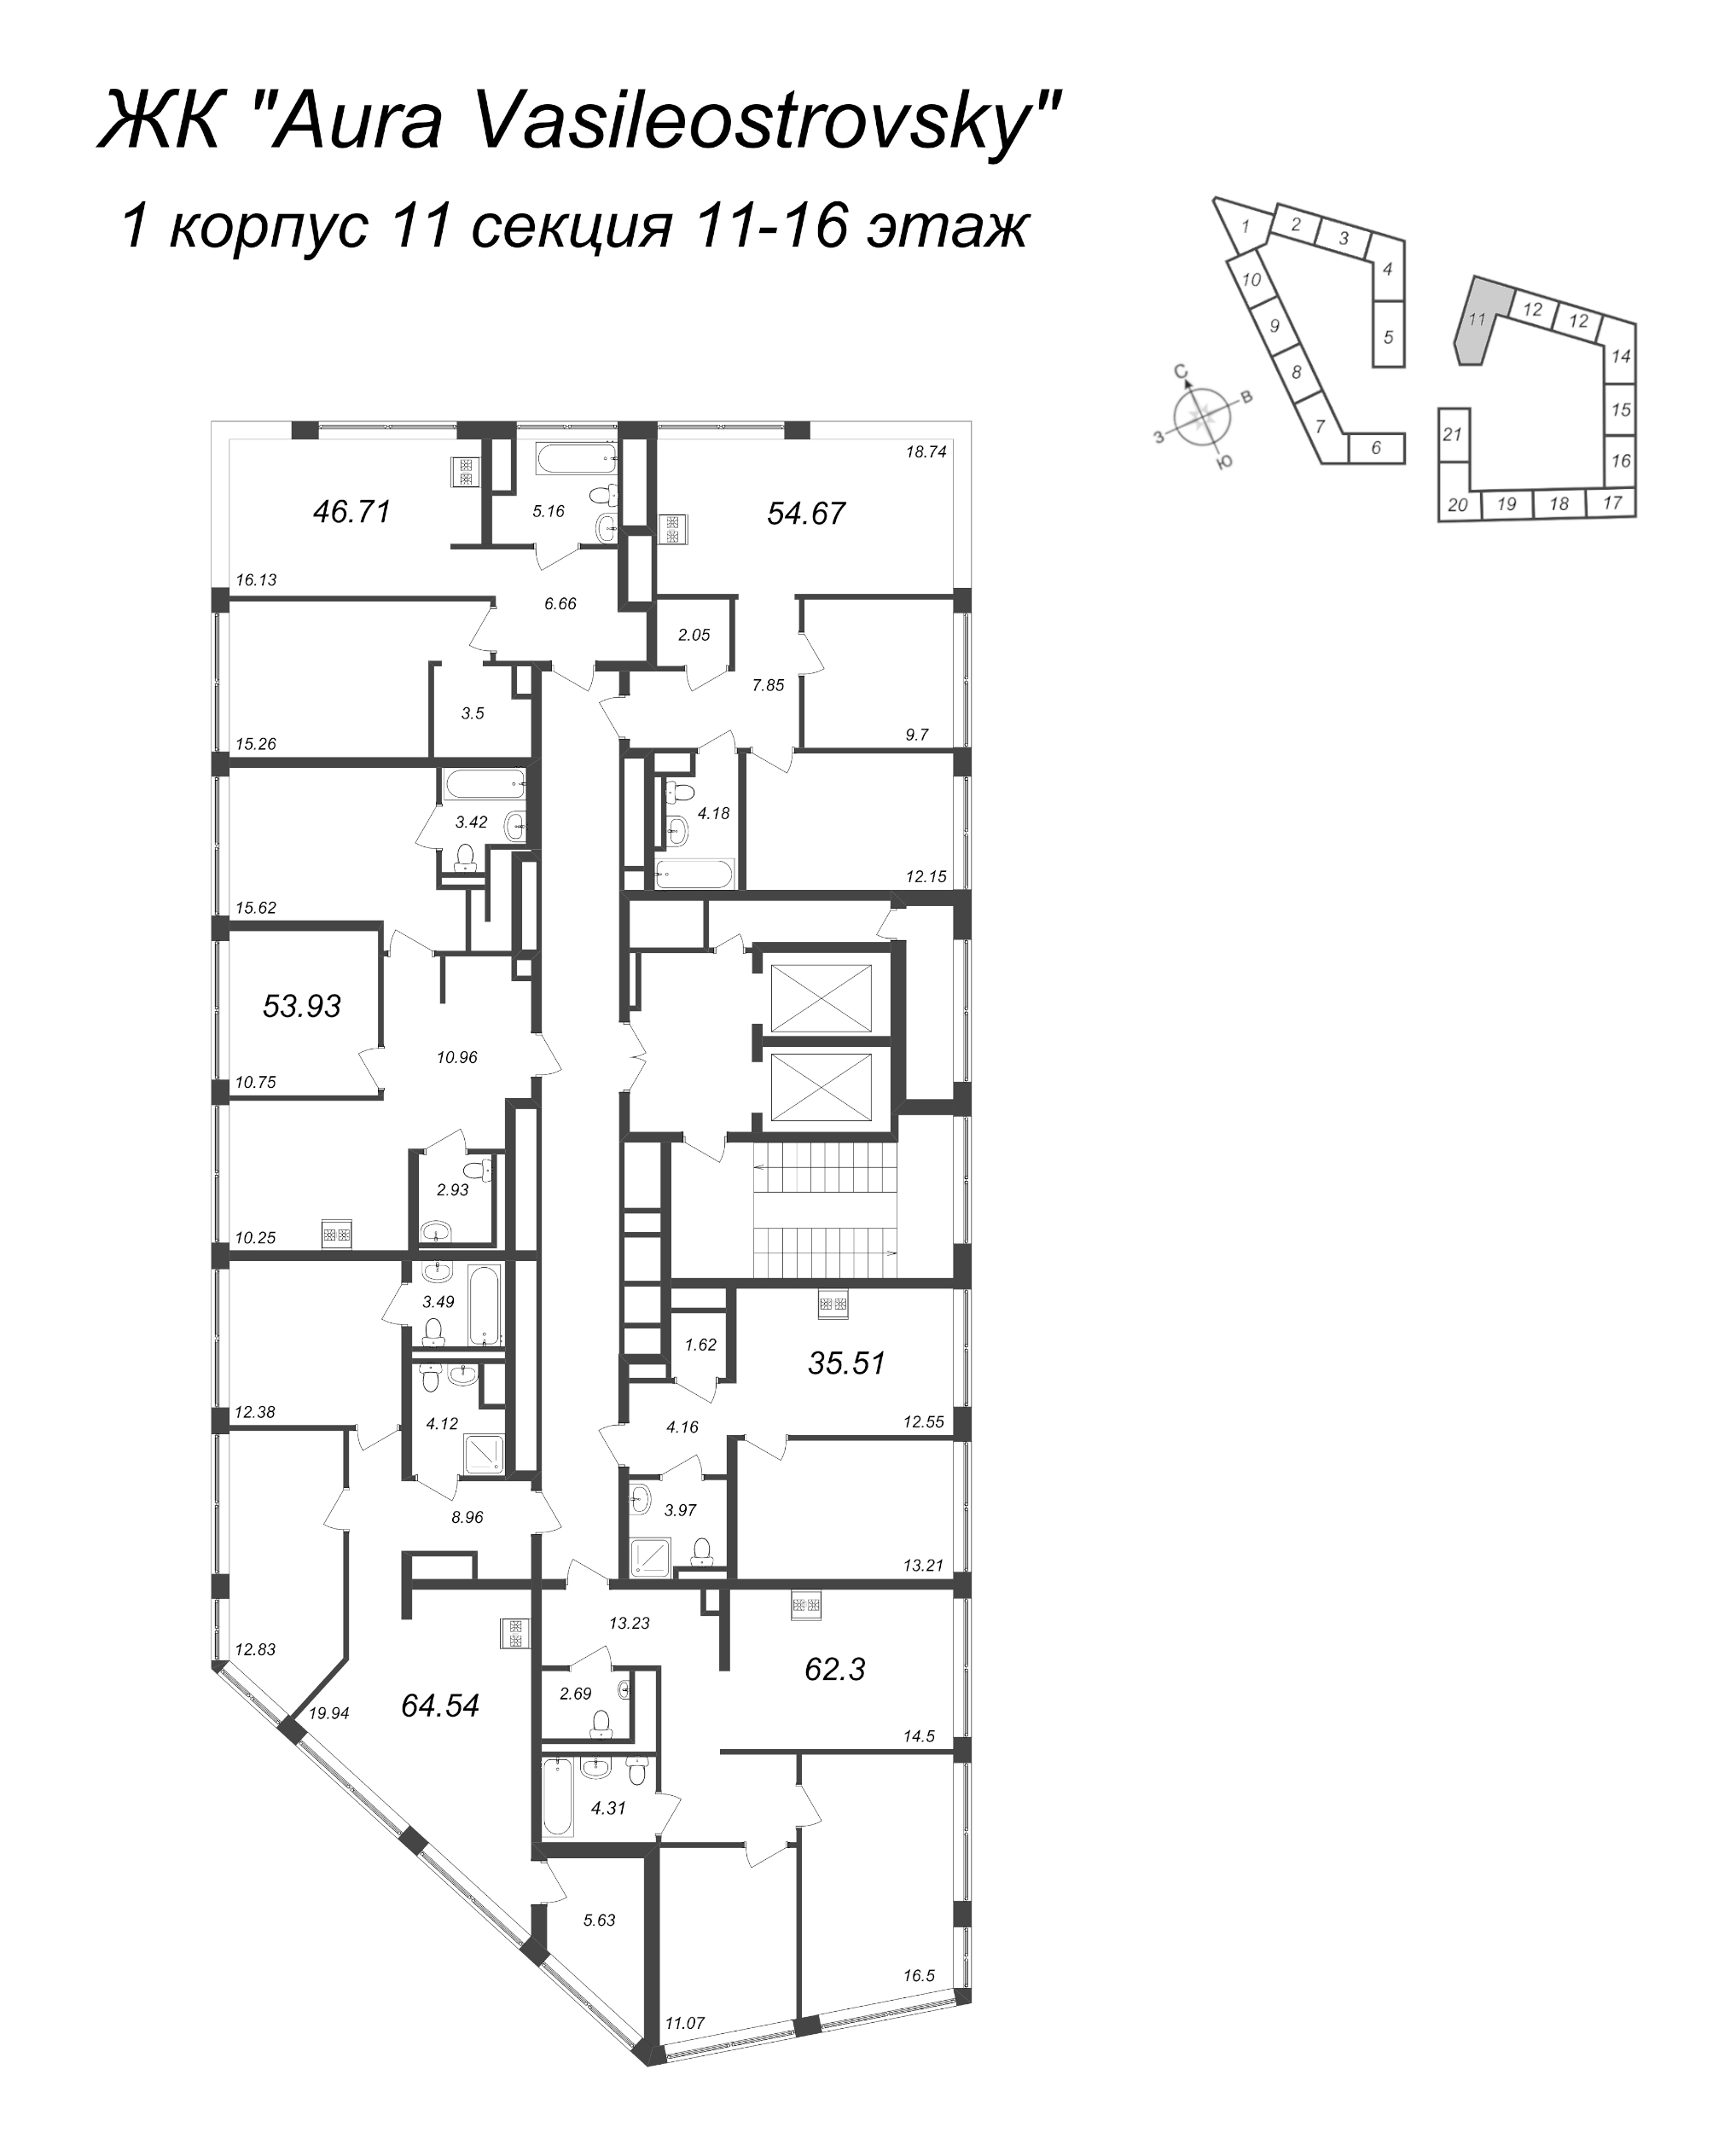 3-комнатная (Евро) квартира, 54.67 м² - планировка этажа